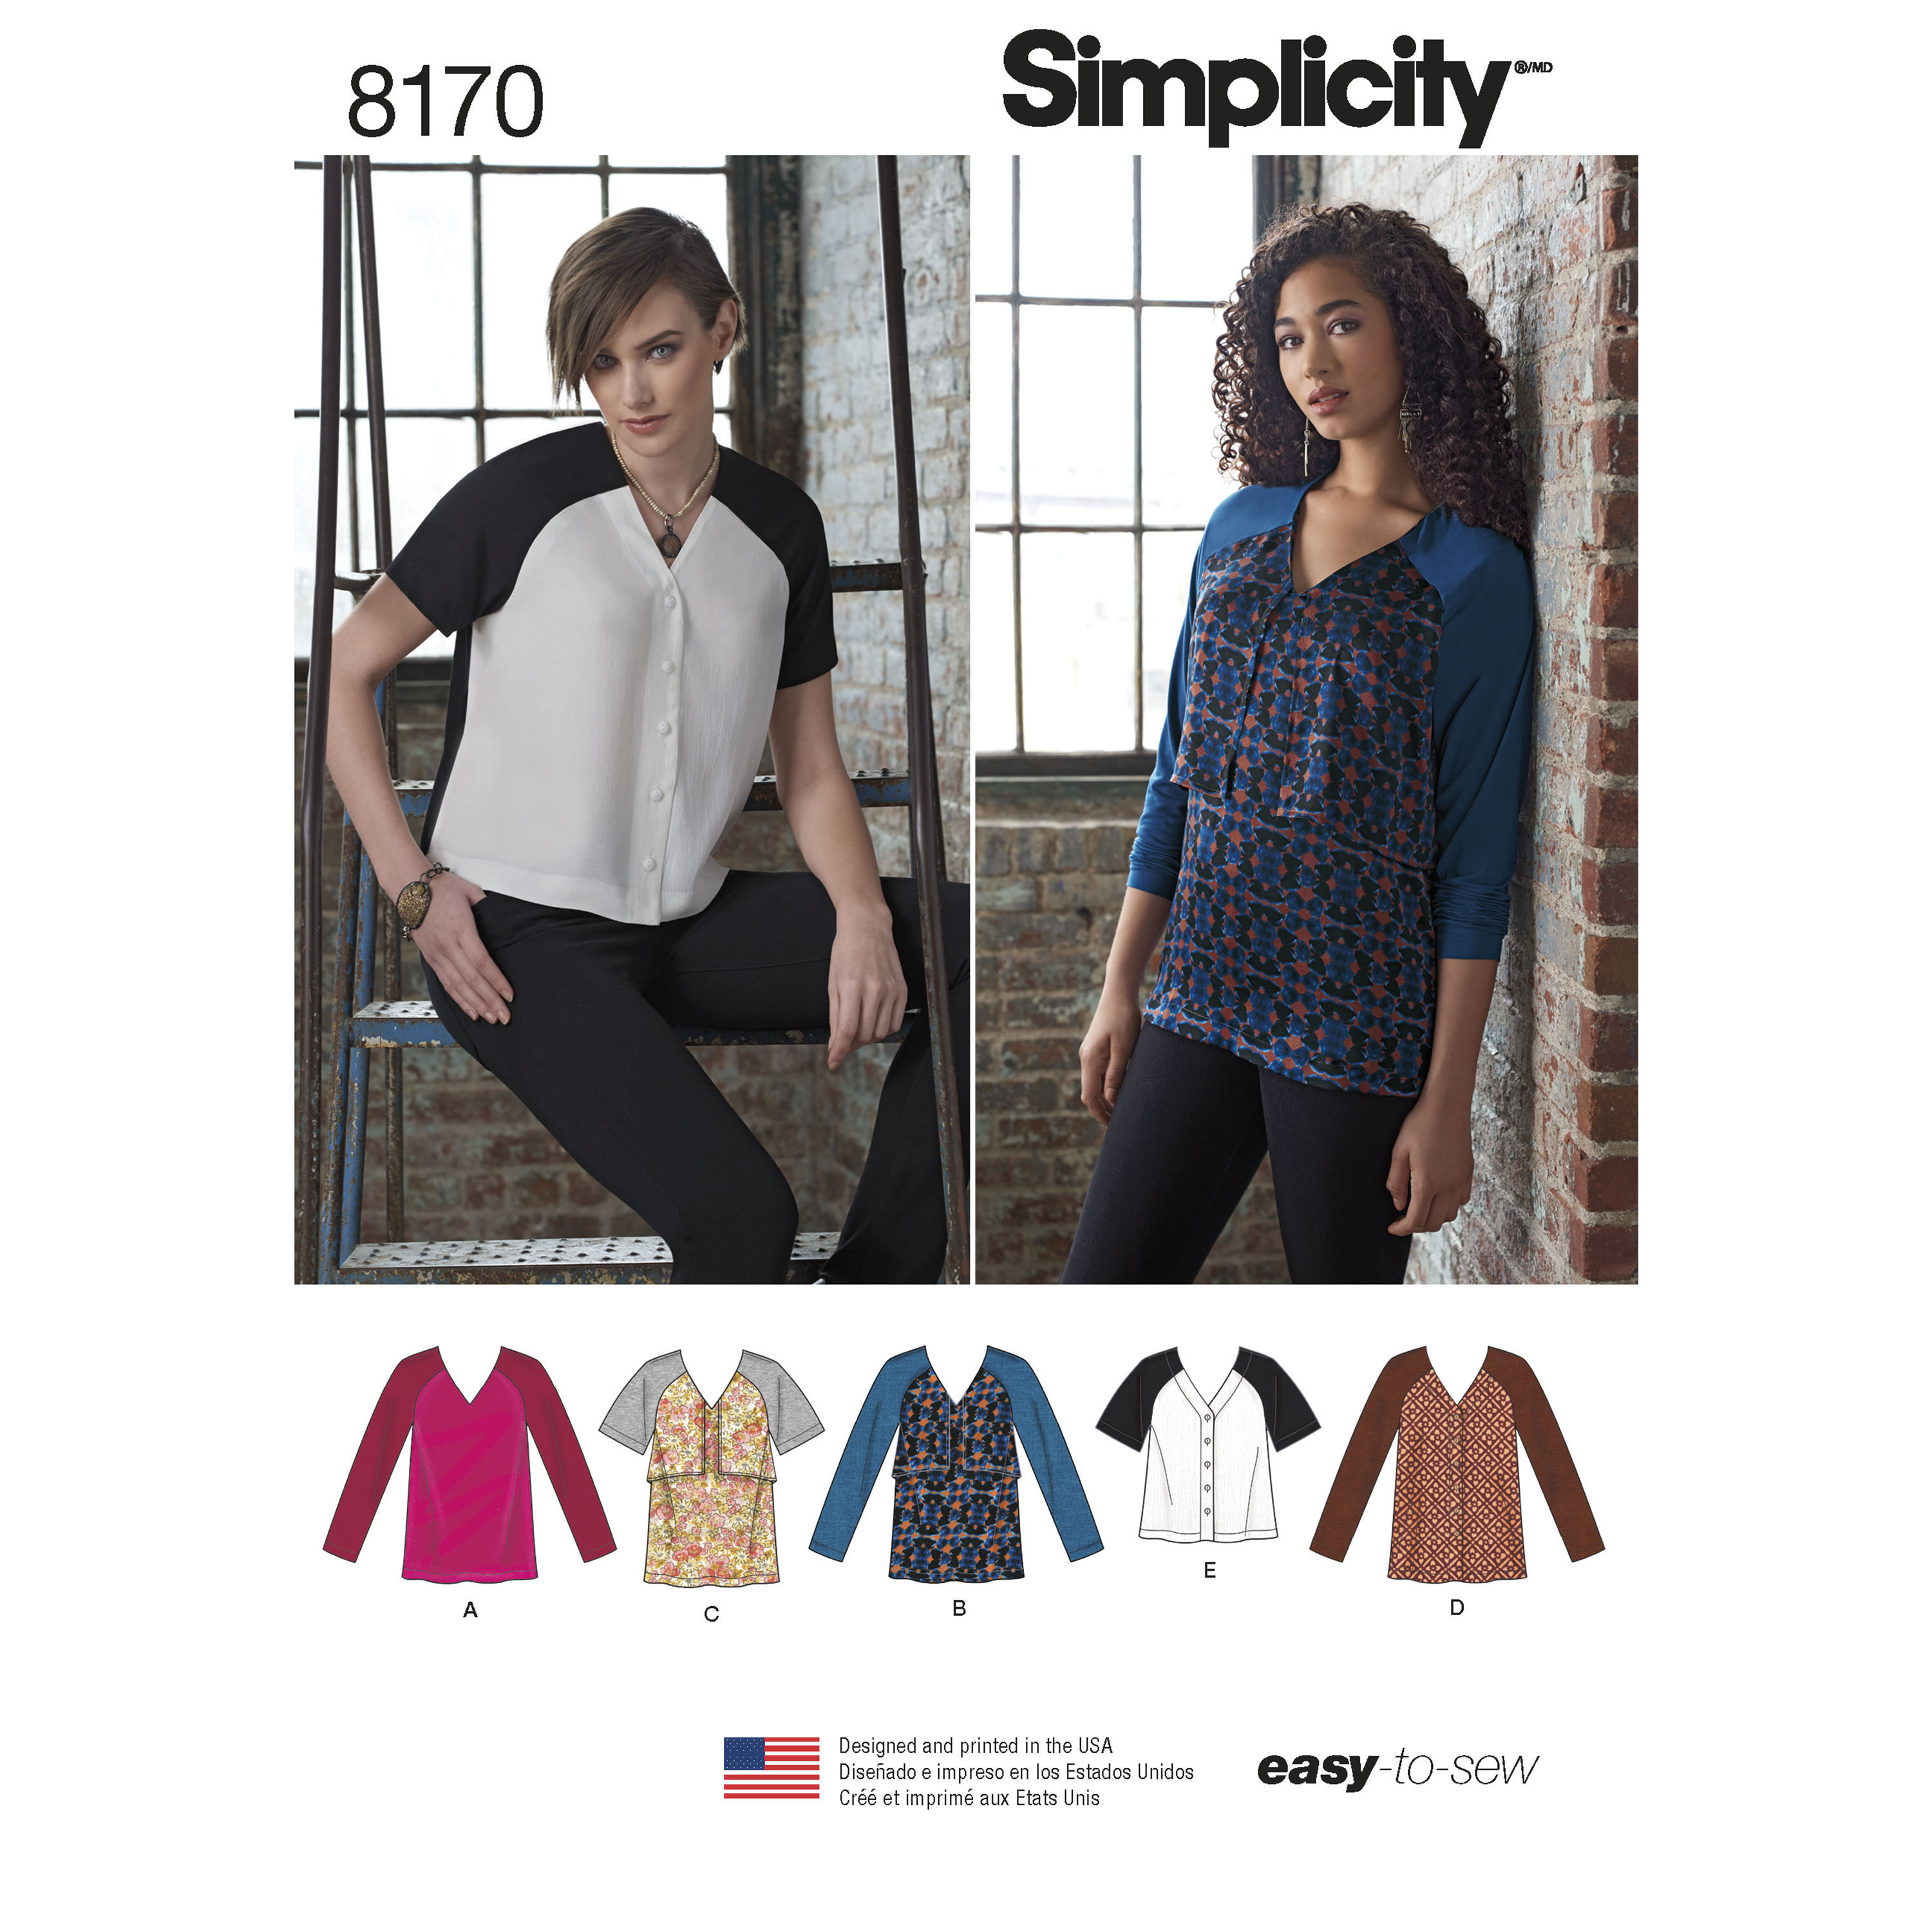 Simplicity 8170 Misses' Easy-to-Sew Raglan Tops